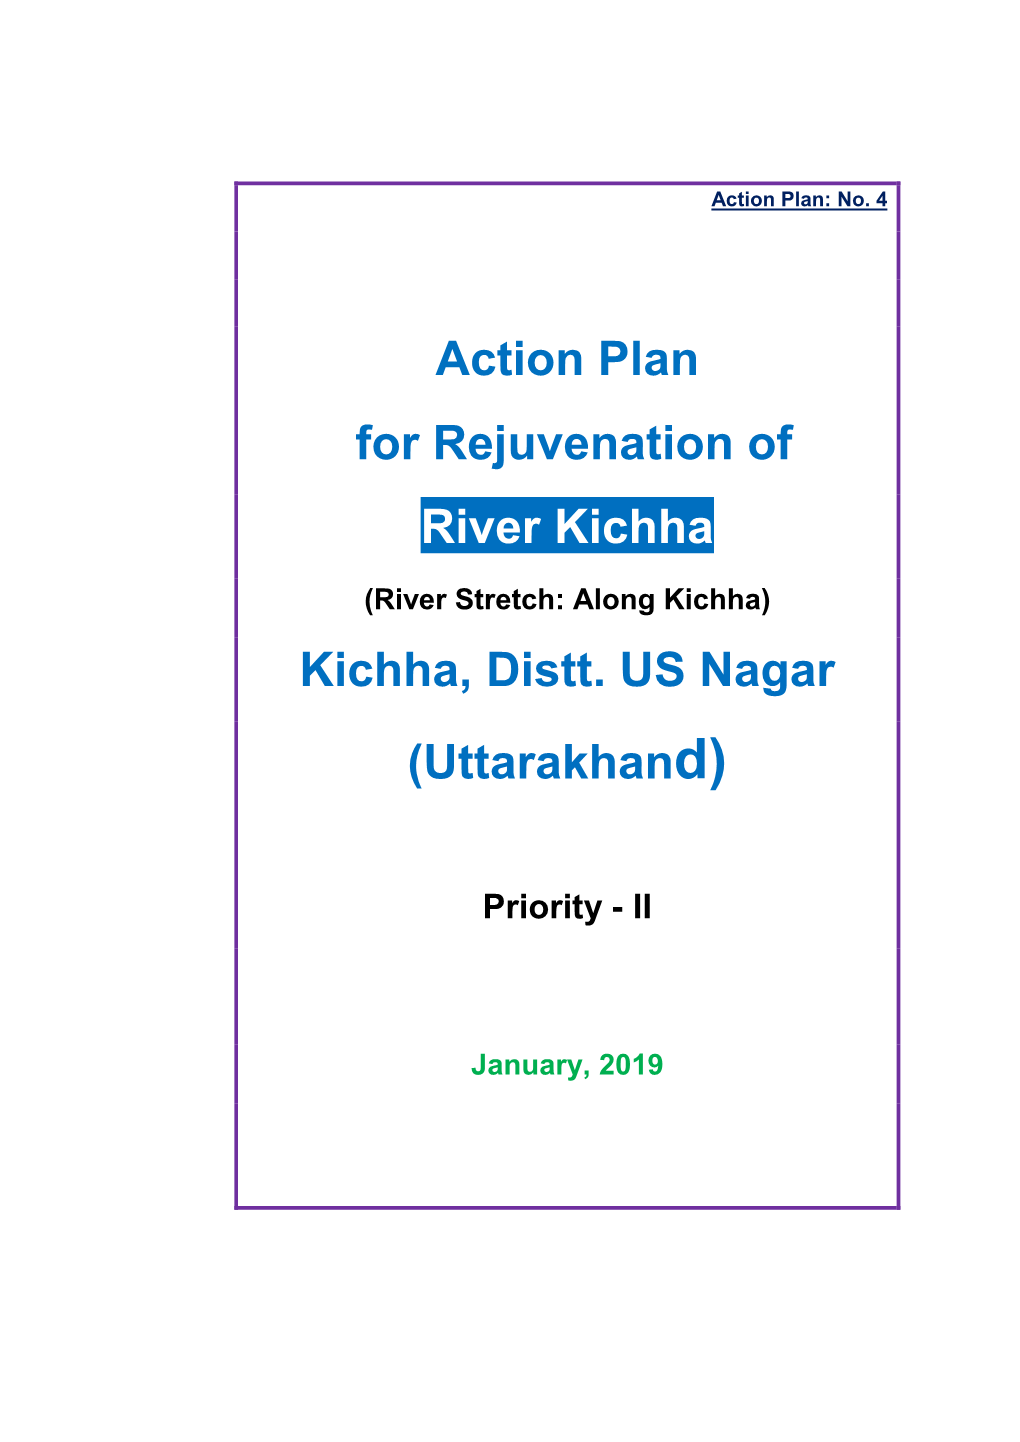 Action Plan for Rejuvenation of River Kichha Kichha, Distt. US Nagar